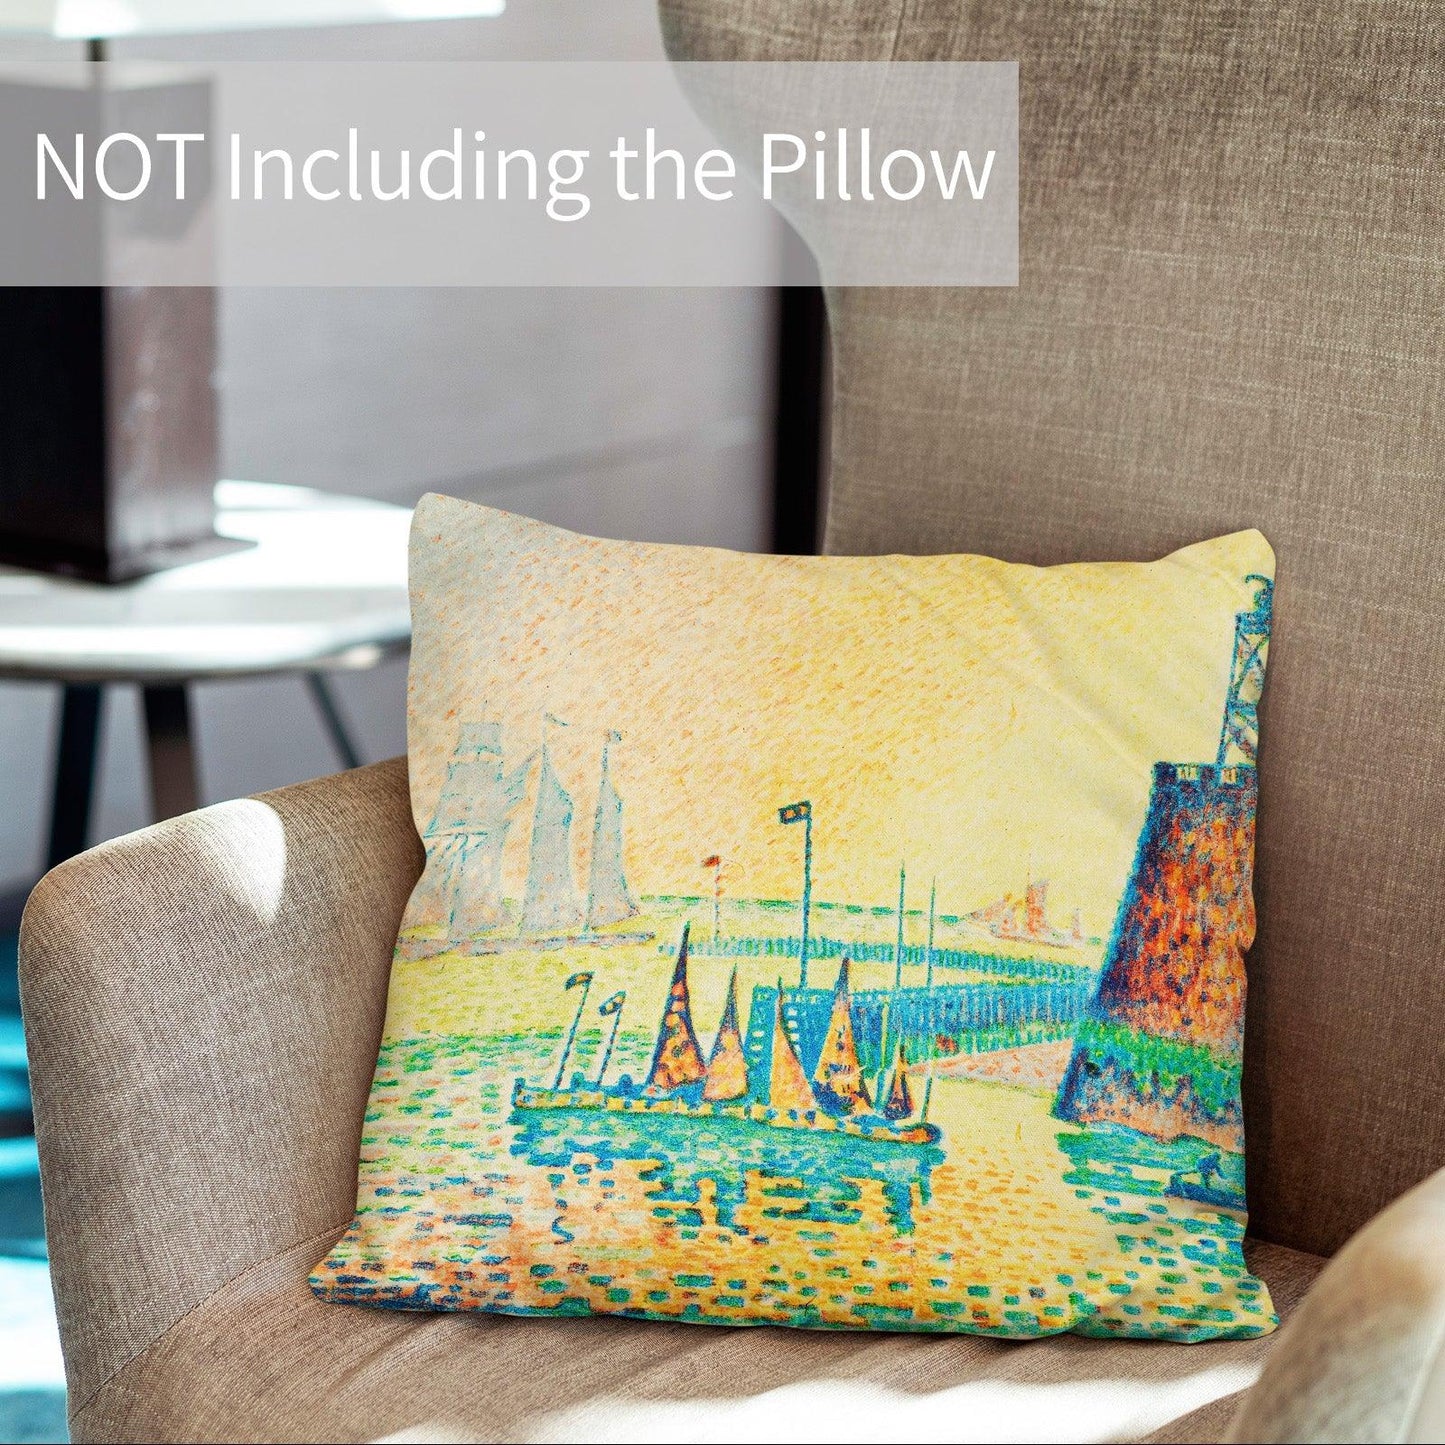 Art Landscape Throw Pillow Covers Pack of 2 18x18 Inch (Evening by Paul Signac) - Berkin Arts